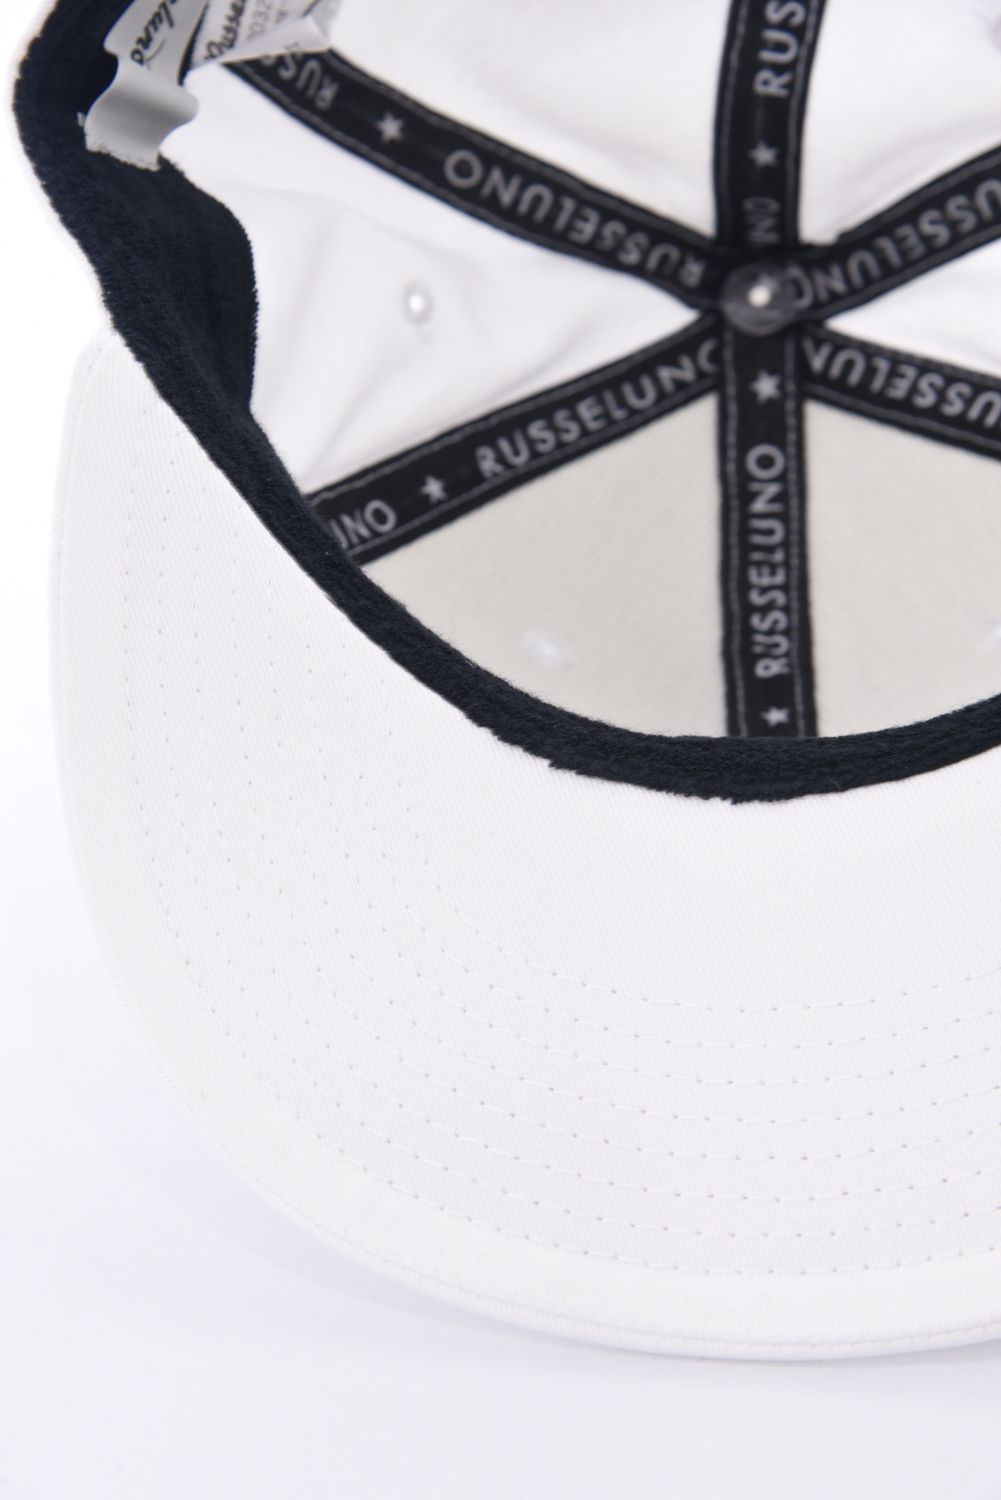 PUBLIC TURFREEs BB CAP / マスクマン刺繍 ベースボールキャップ ホワイト - フリーサイズ